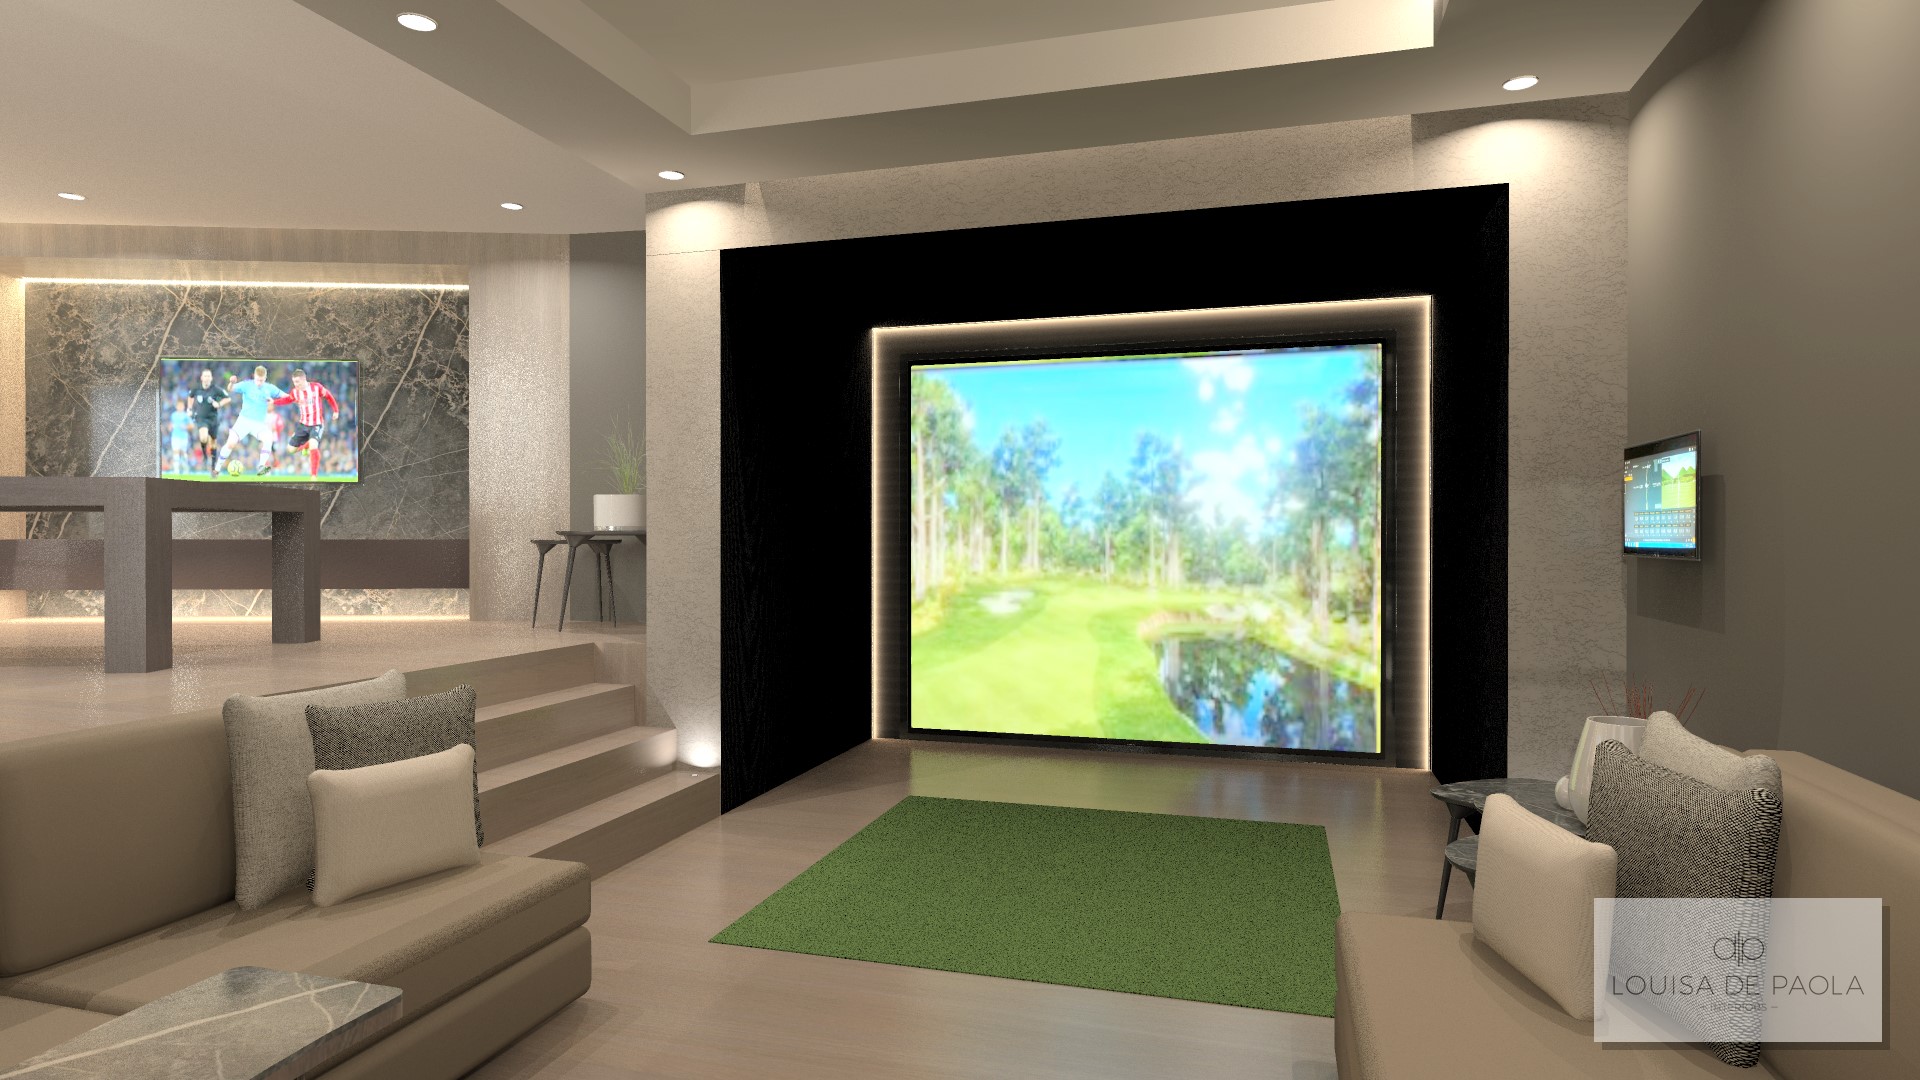 Cinema Room With Golf Simulator